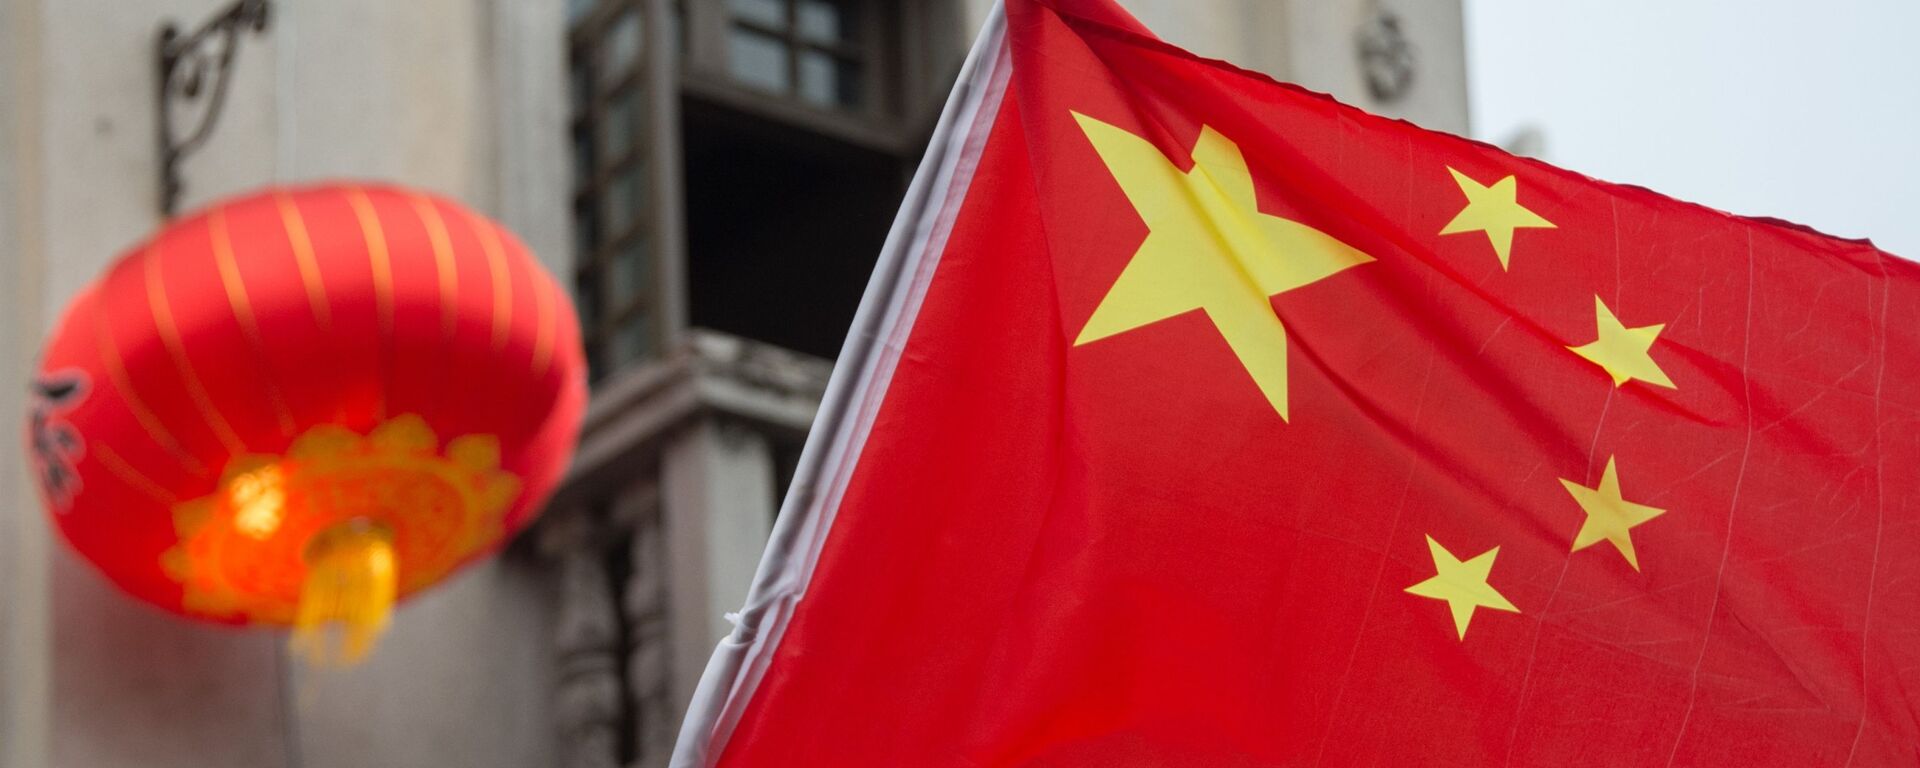 La bandera de China - Sputnik Mundo, 1920, 12.01.2021